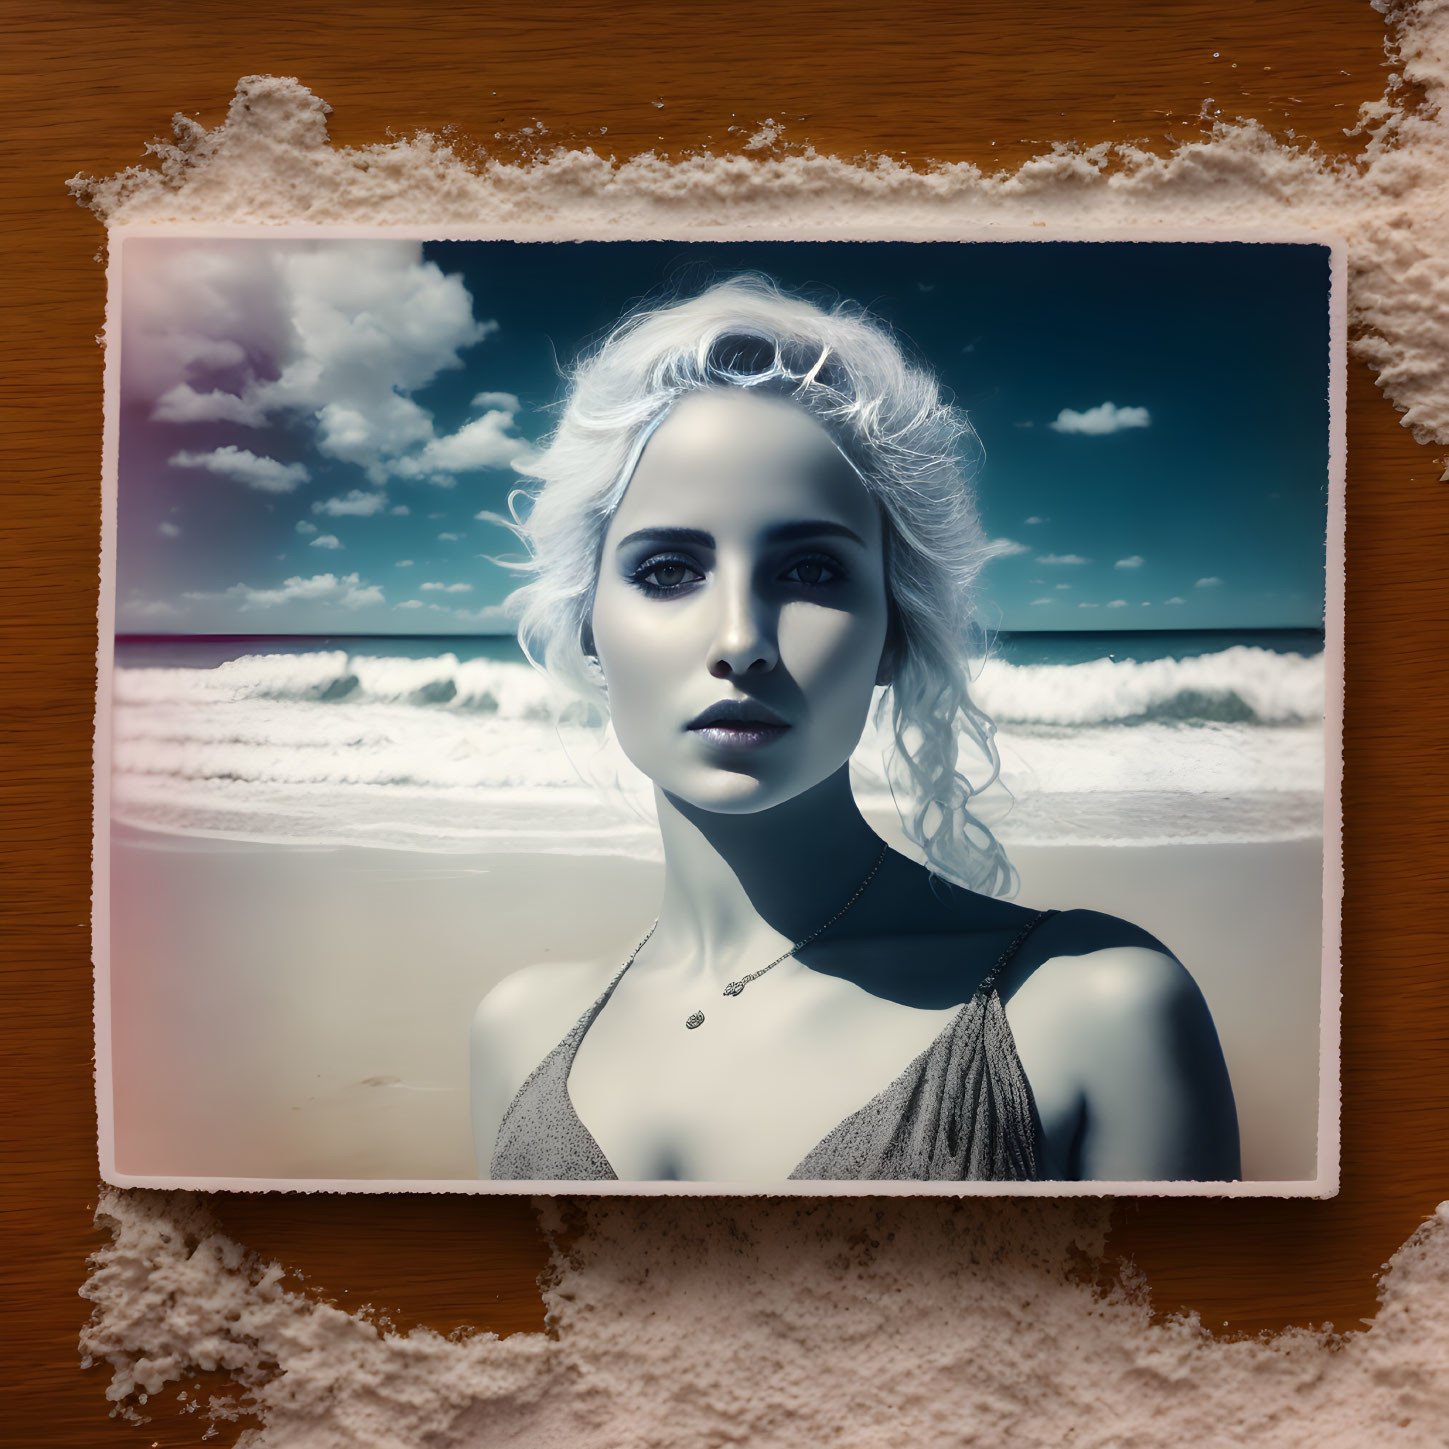 Vintage-Style Platinum Blonde Woman Photo on Beach Background